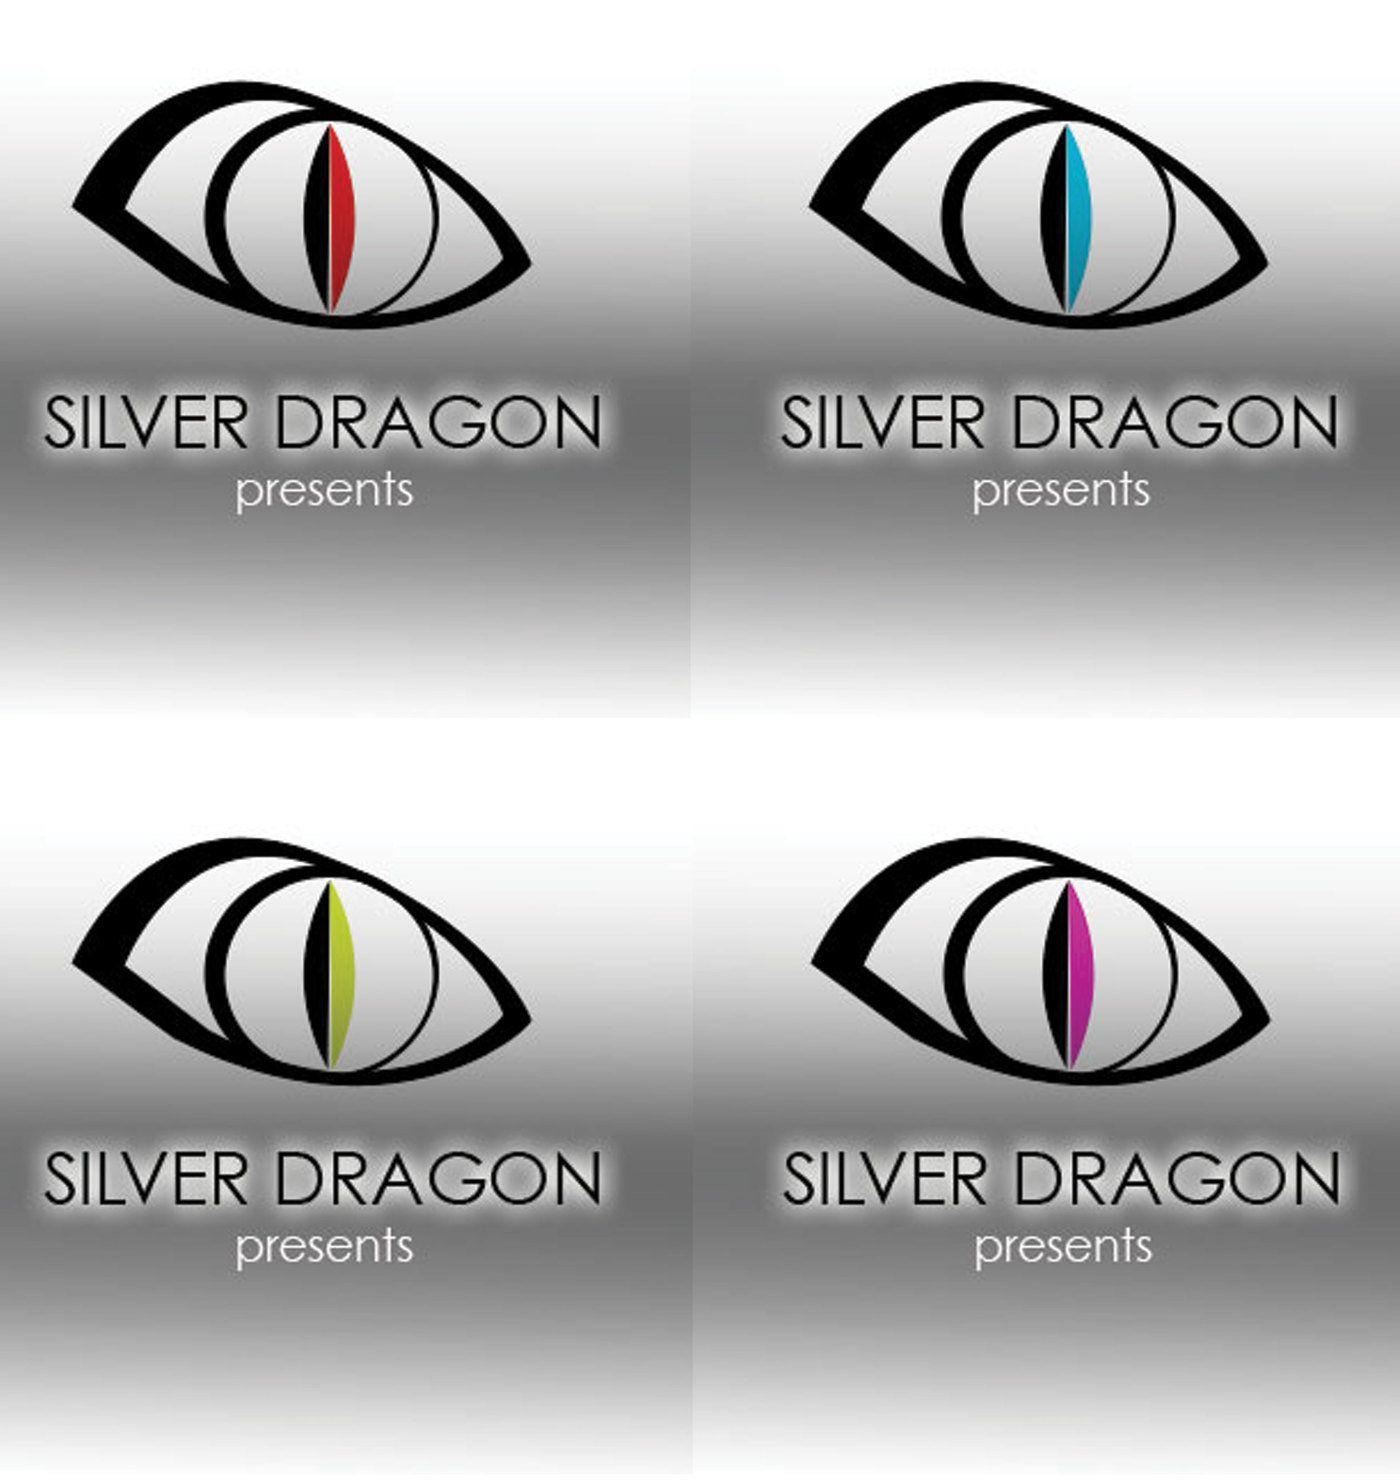 Silver Dragon Logo - Silver Dragon logo - Identity by William Kim at Coroflot.com